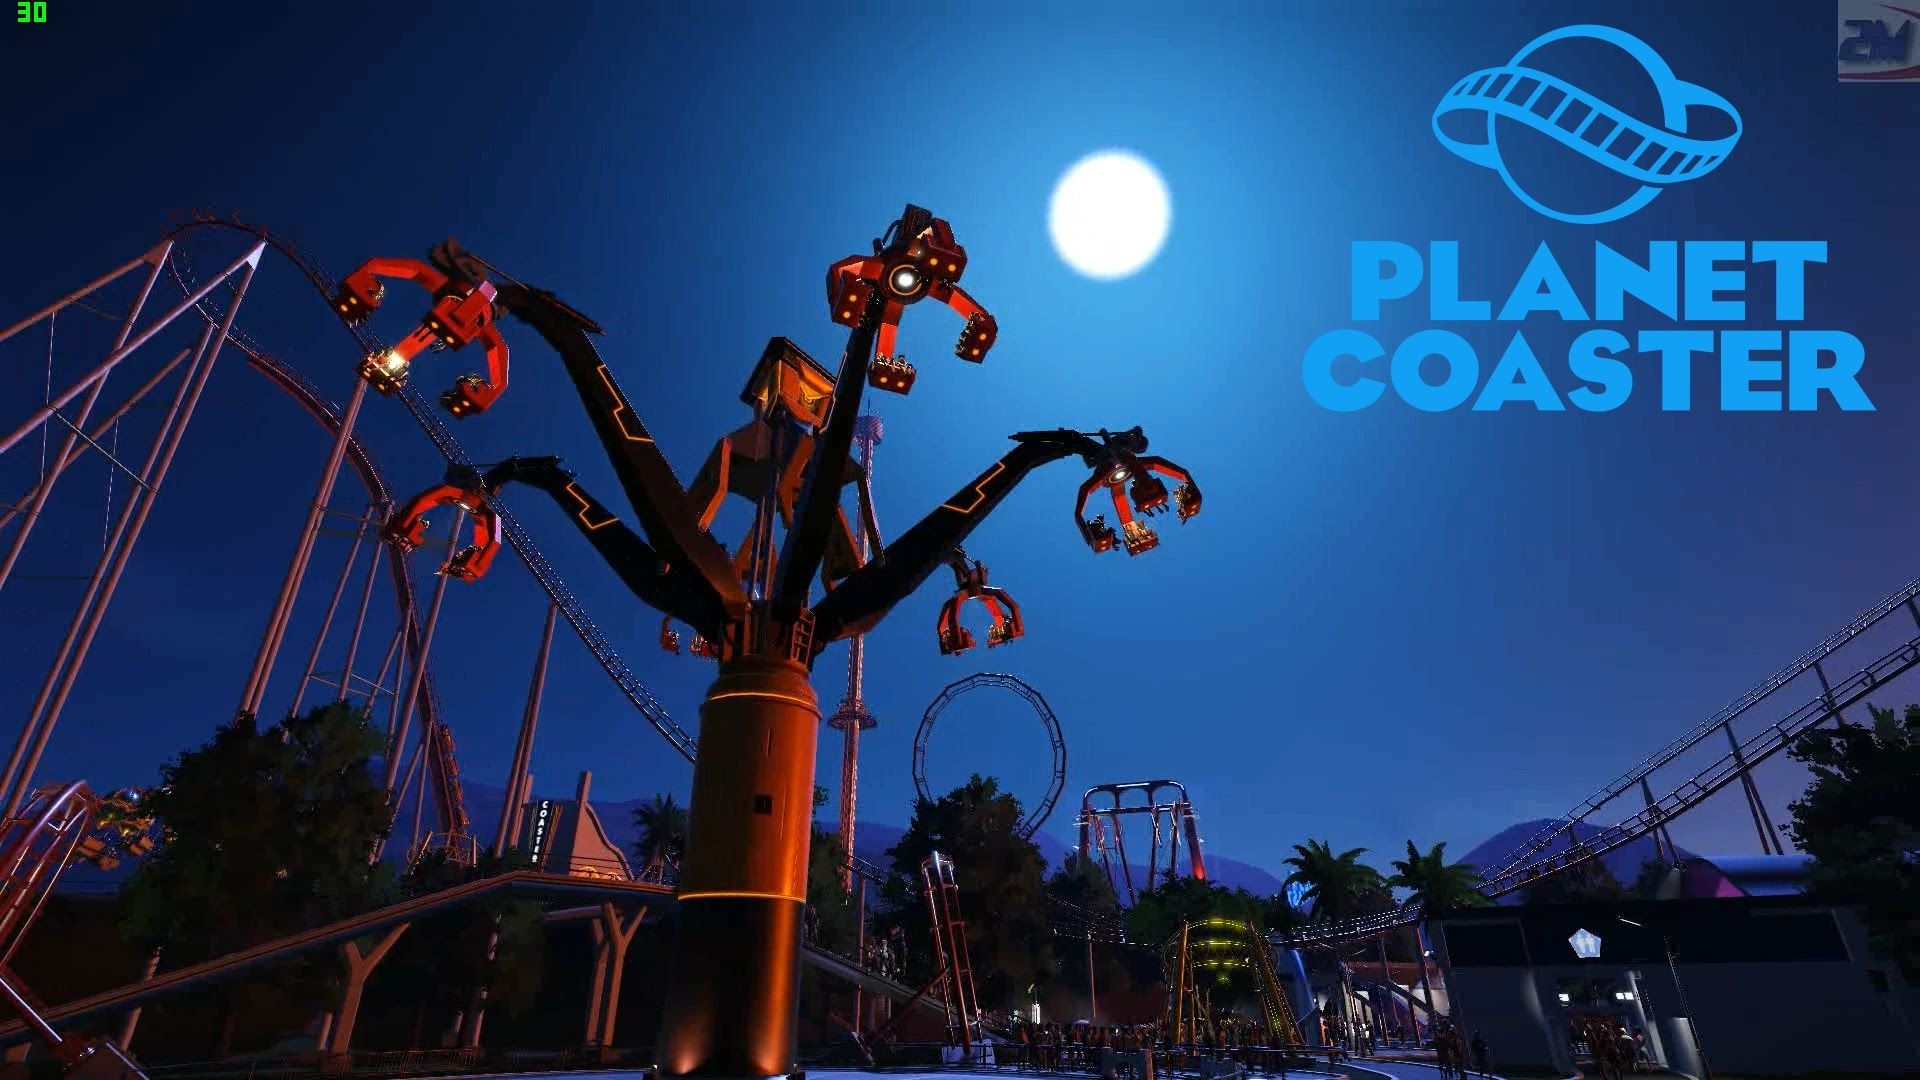 download planet coaster 2